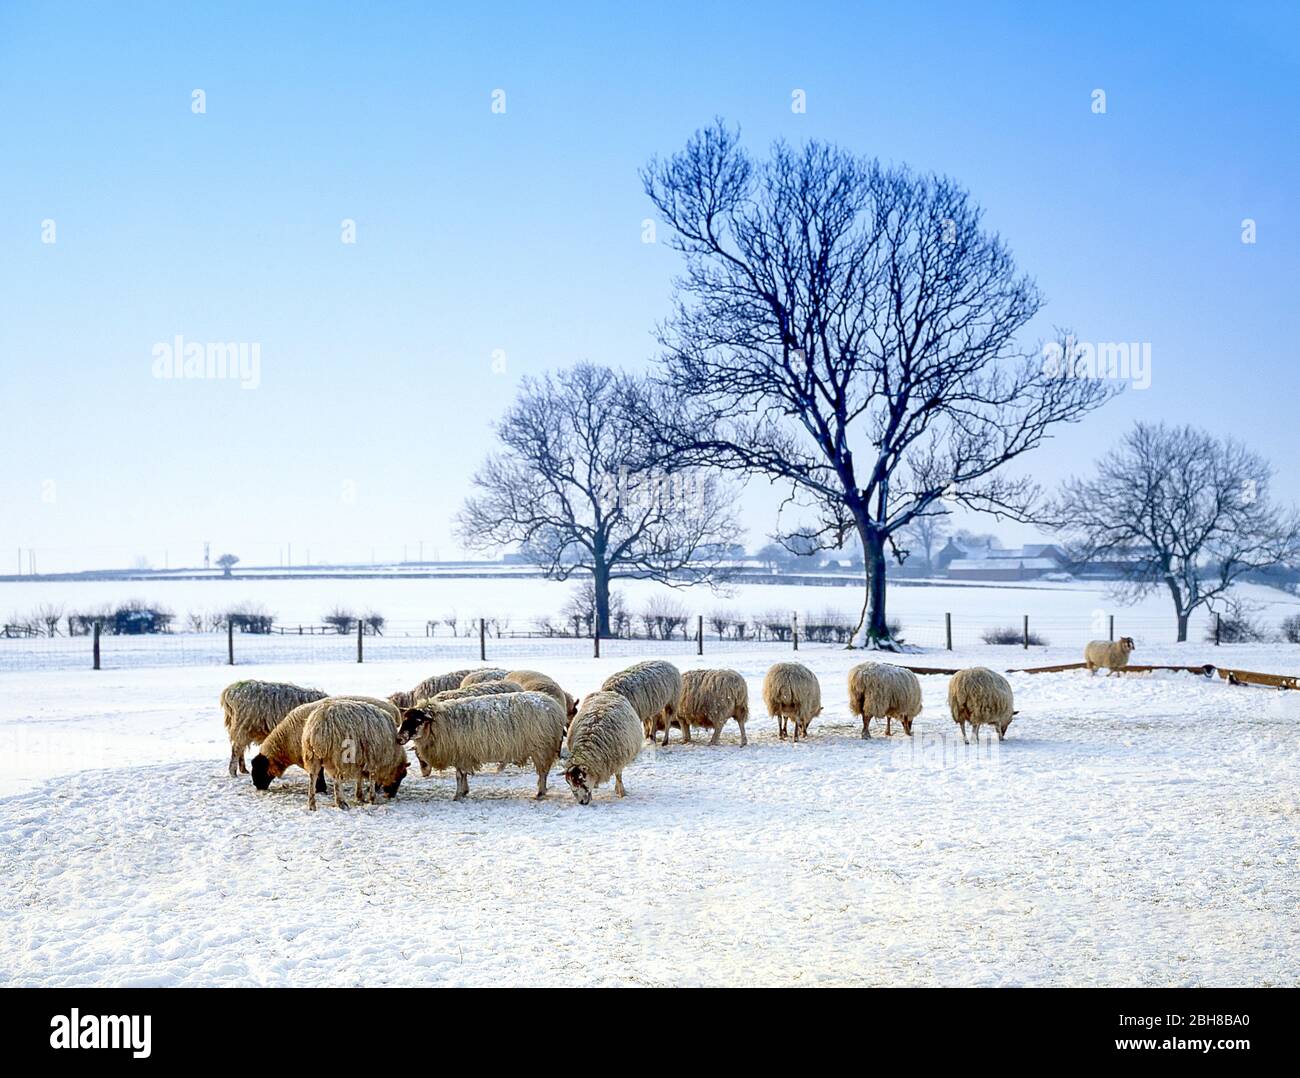 Sheep in winter snow, Gloucestershire, England, United Kingdom Stock Photo